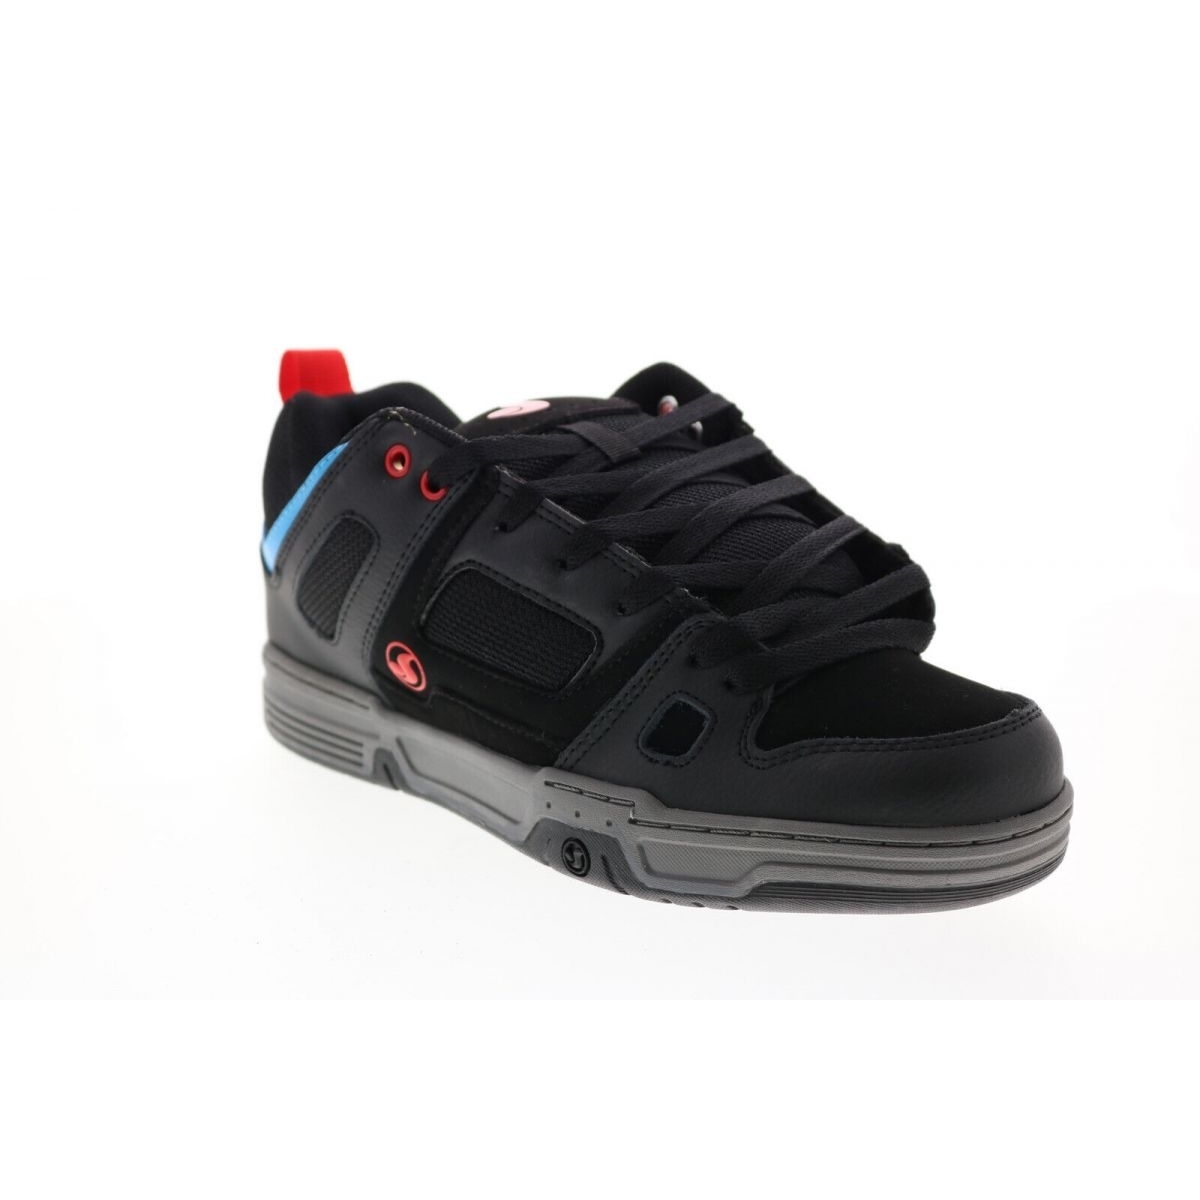 DVS Men's Gambol Skate Shoe 0 BLACK FIERY RED BLUE NUBUCK - BLACK FIERY RED BLUE NUBUCK, 9.5